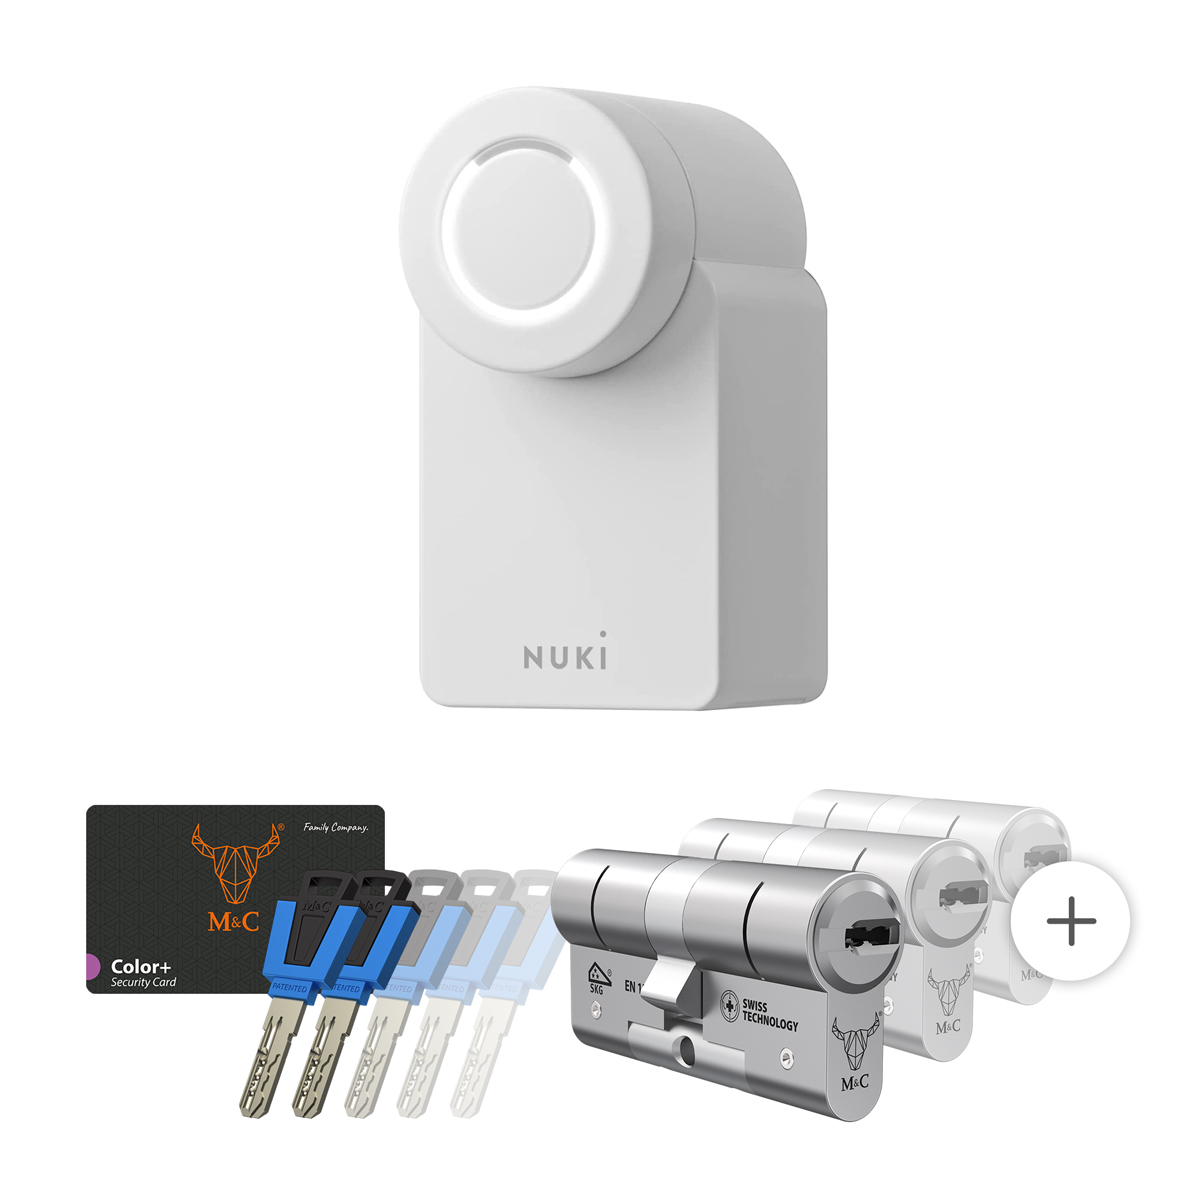 Nuki Smart Lock 4.0 wit met cilinderslot M&C Color plus